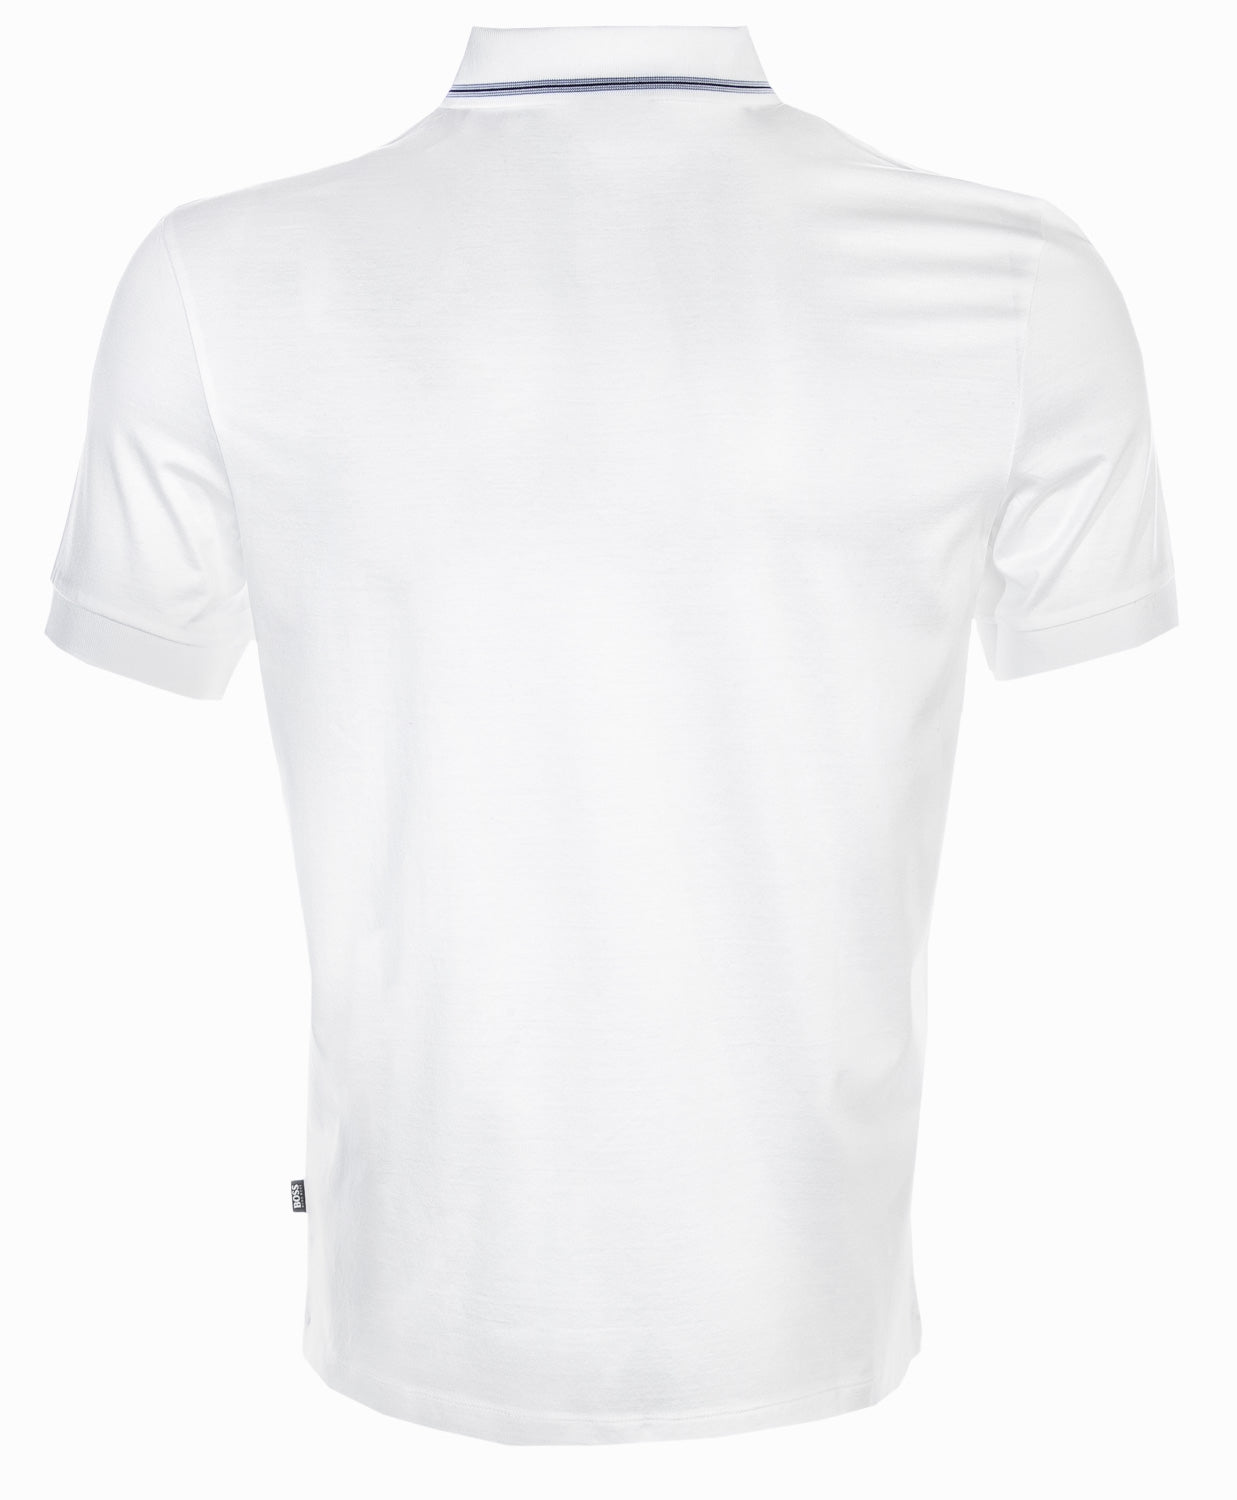 BOSS Paras 04 Polo Shirt in White